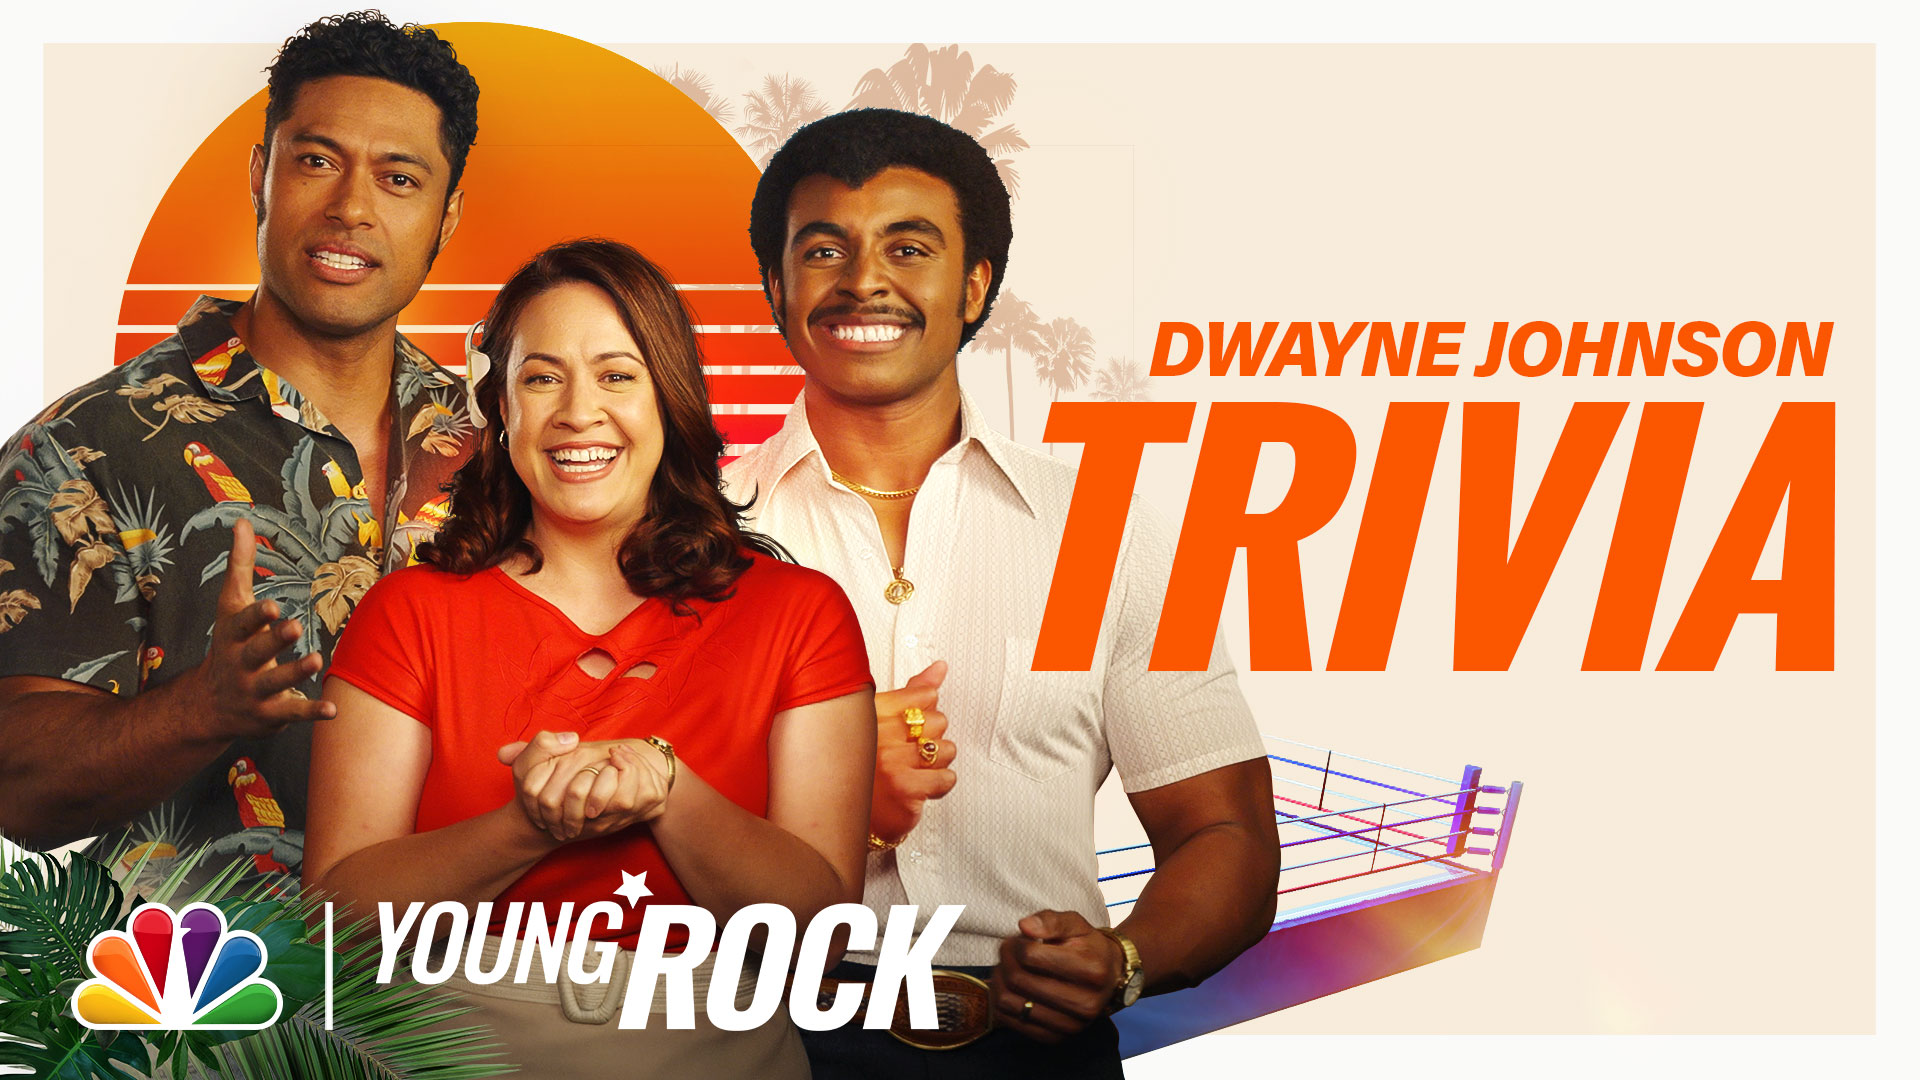 Young Rock': Review of Dwayne Johnson NBC Sitcom